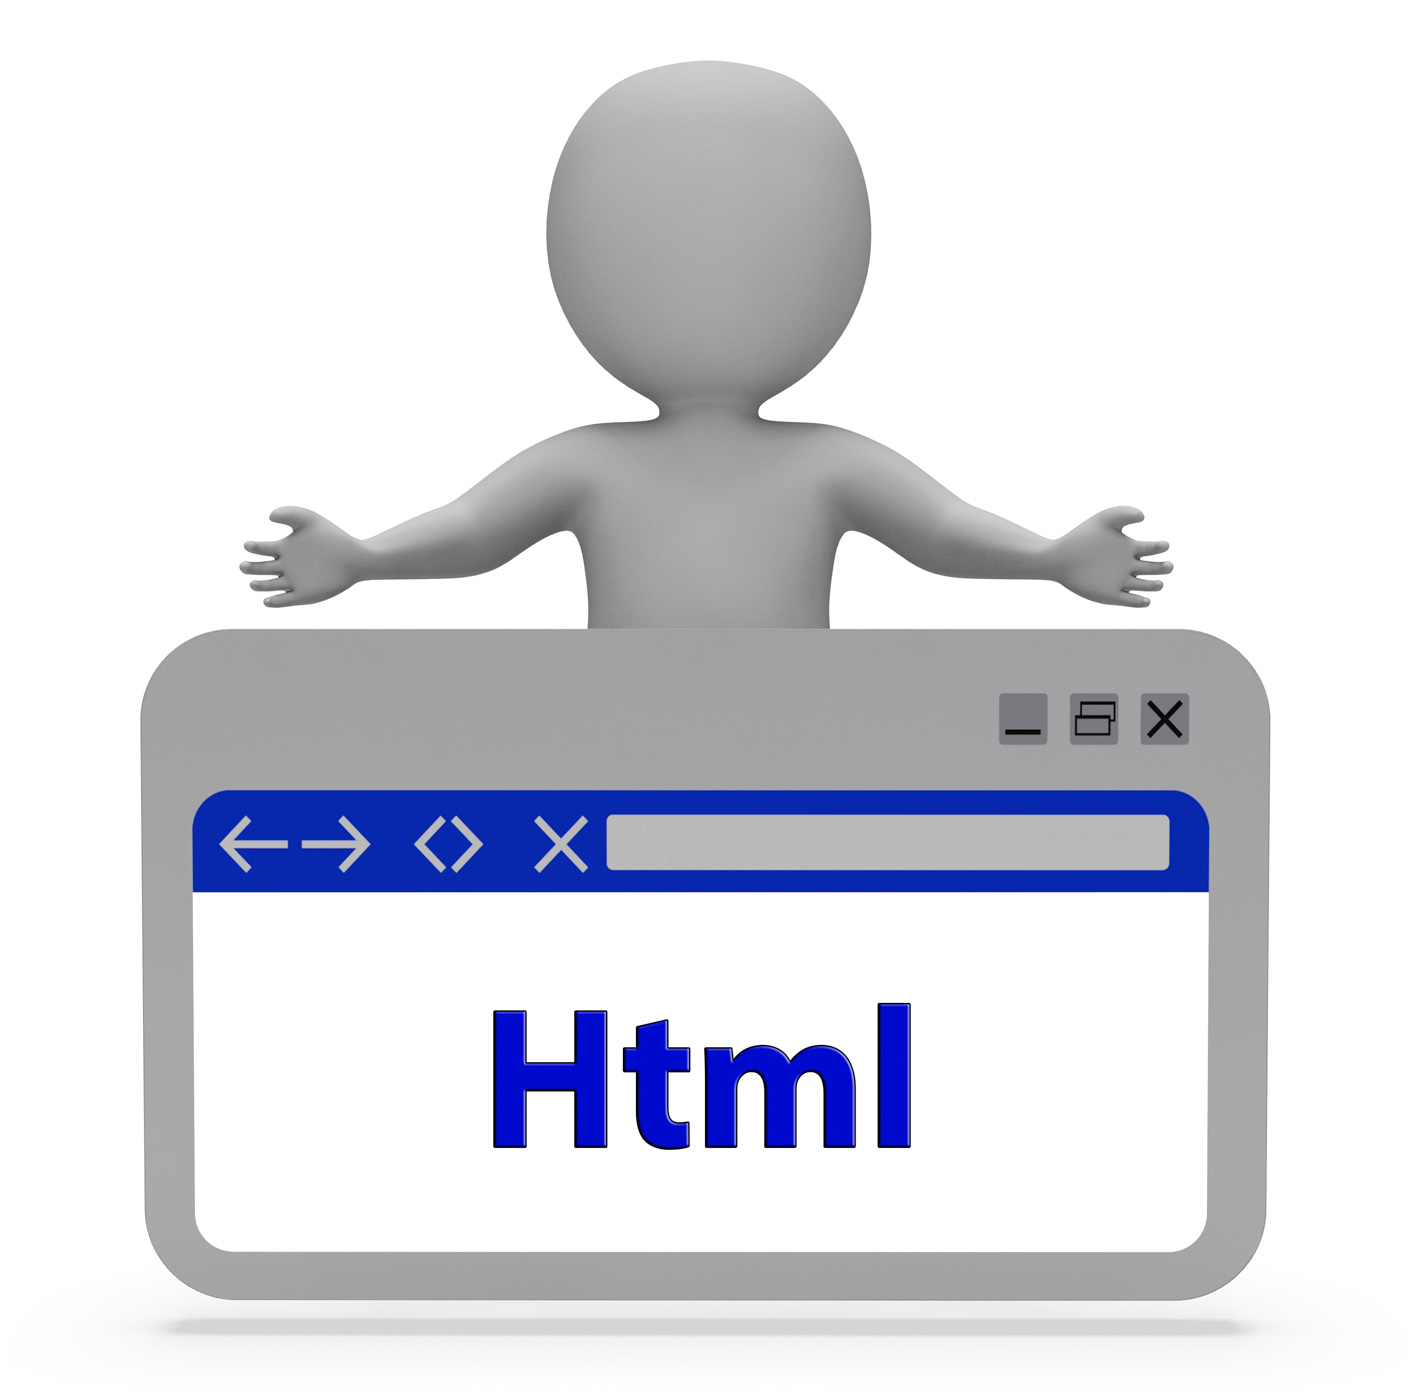 Html webpage indicates hypertext markup language 3d rendering photo